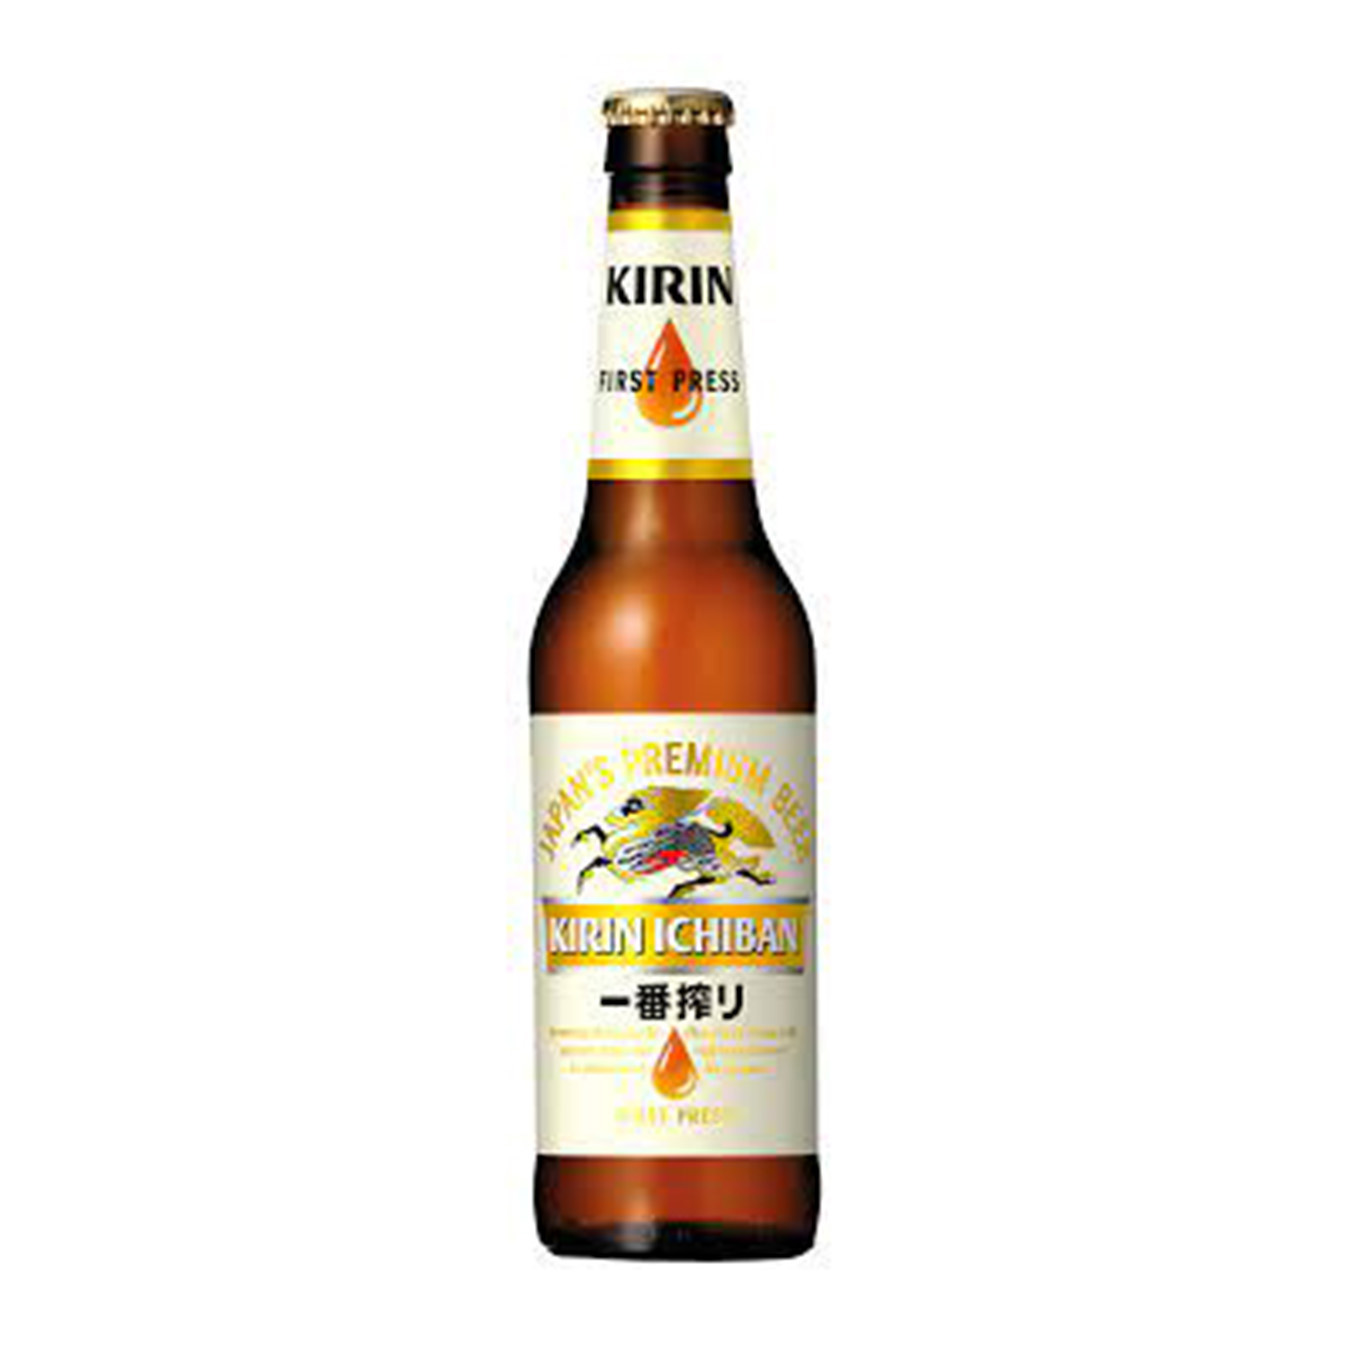 Light beer Kirin Ichiban 5% 0.33l glass bottle